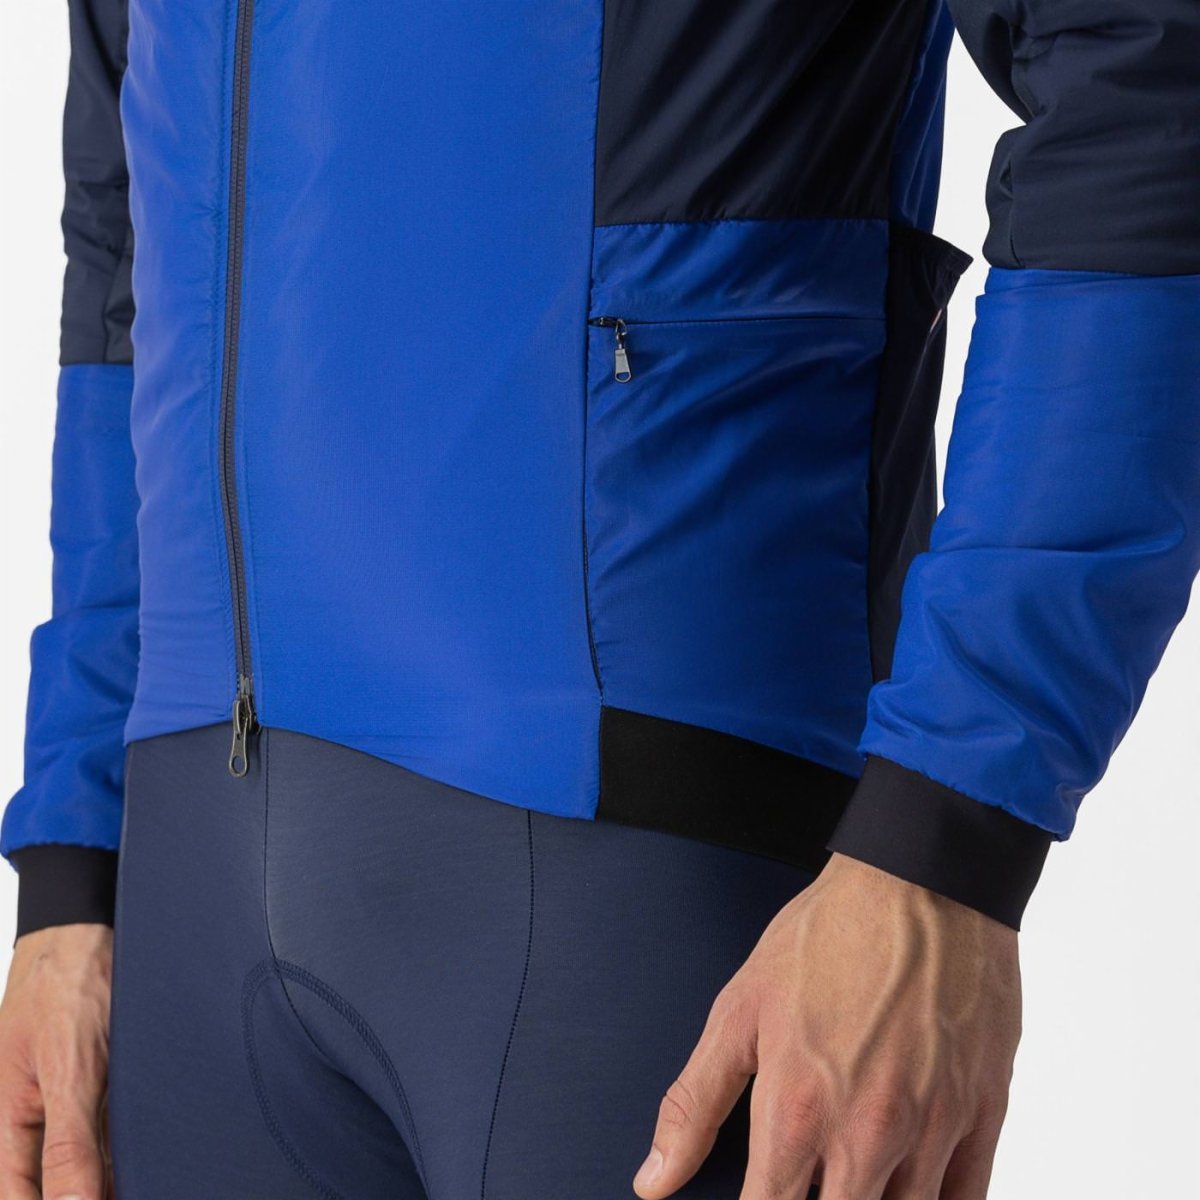 Castelli Fly Thermal Jacket Blue side pocket